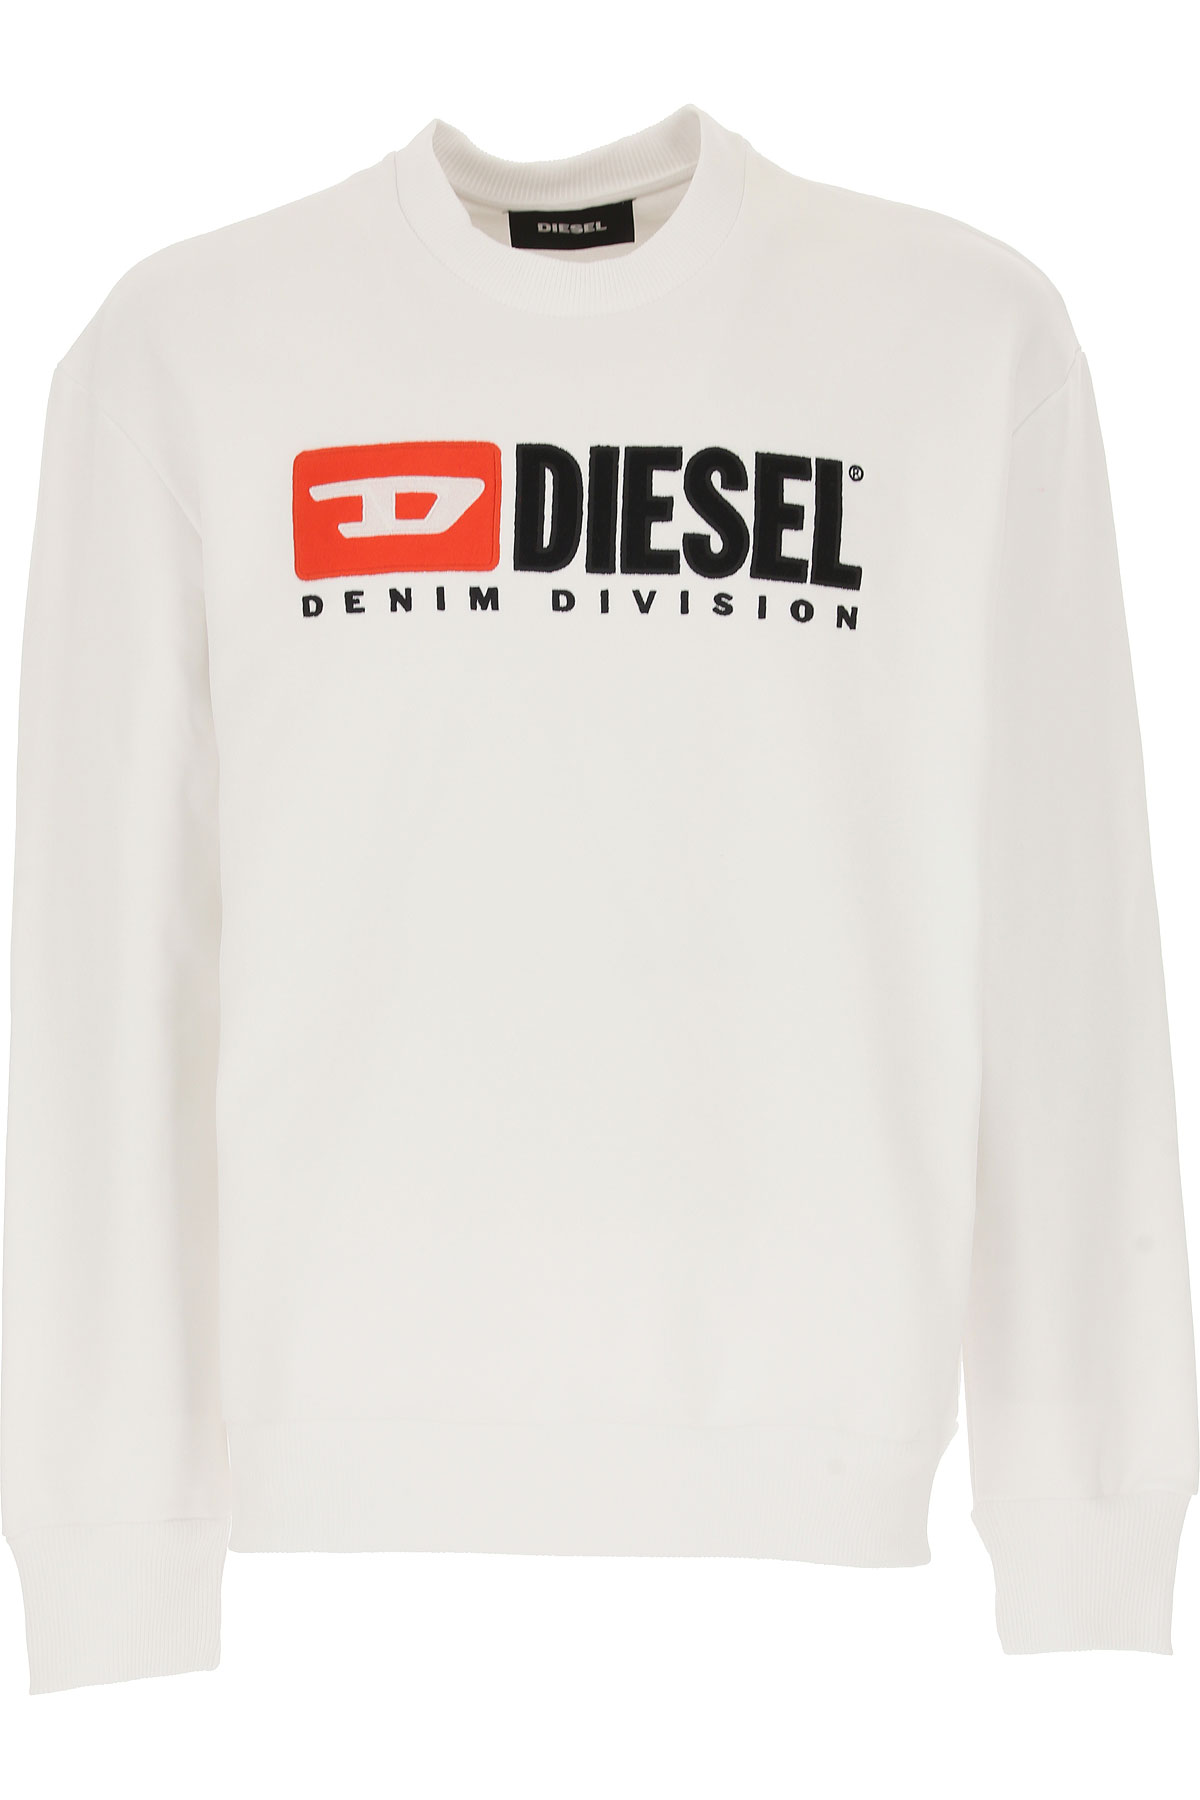 Дизель бел. Толстовка Diesel белая женская 1978. Толстовка Diesel белый. Толстовка Diesel мужская белая. Diesel свитшот белый.